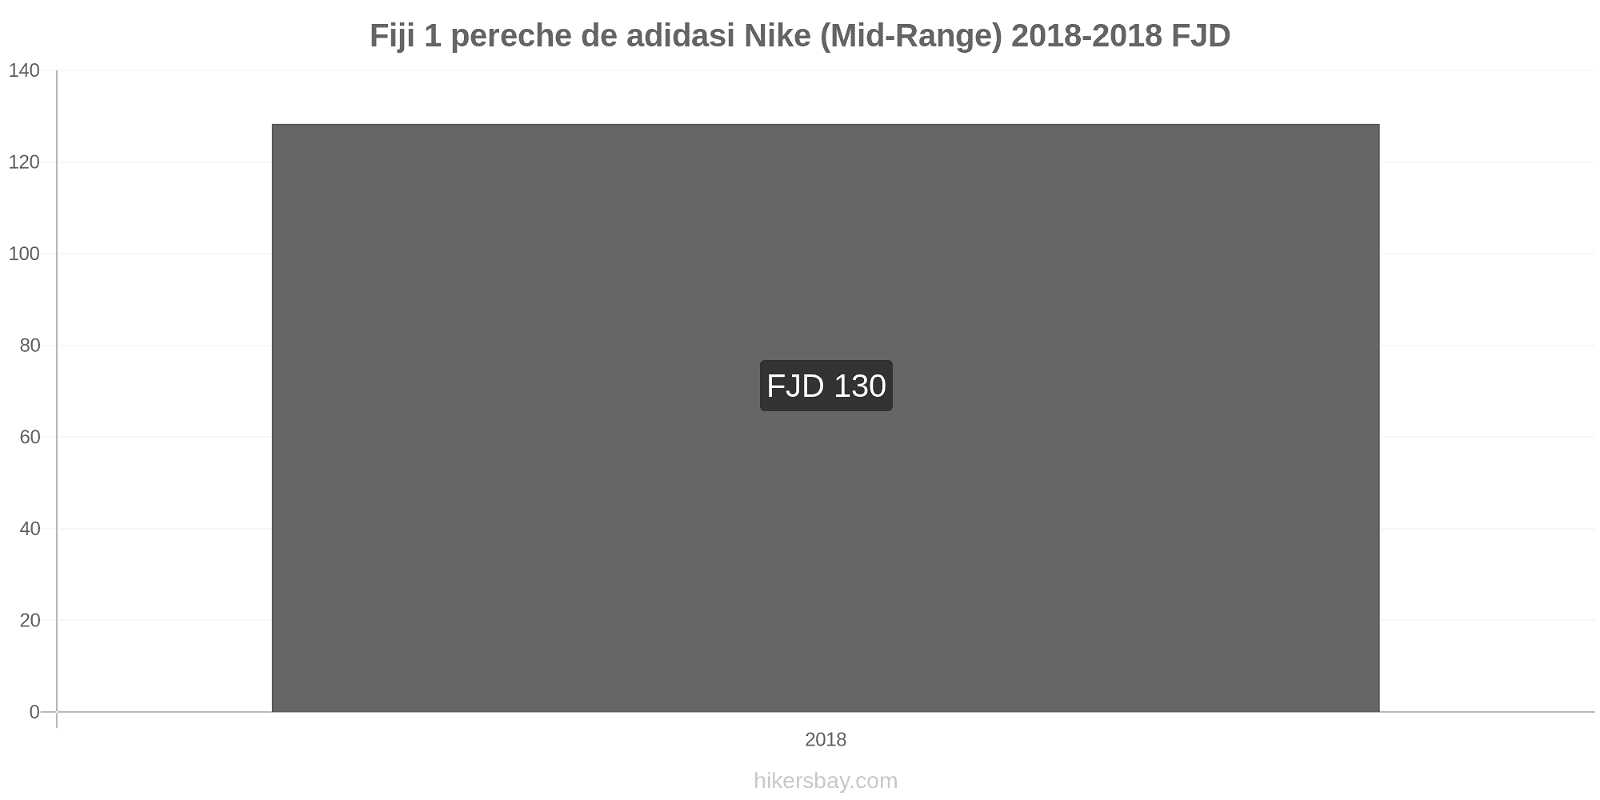 Fiji modificări de preț 1 pereche de adidasi Nike (Mid-Range) hikersbay.com